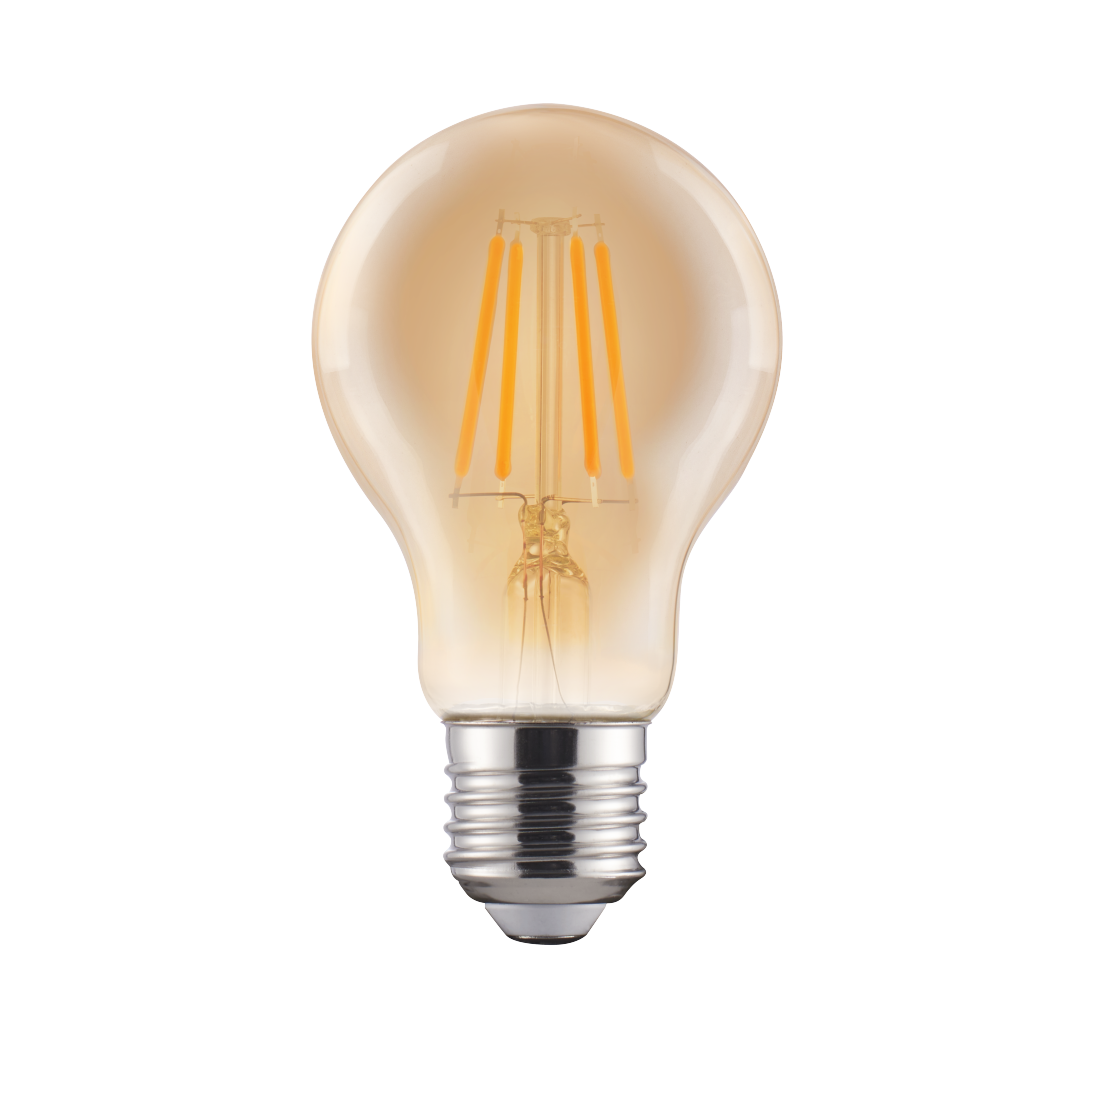 abx Druckfähige Abbildung - Xavax, LED -Filament, E27, 400lm 4W, Vintage-Lampe Glühlampe, Warmweiß